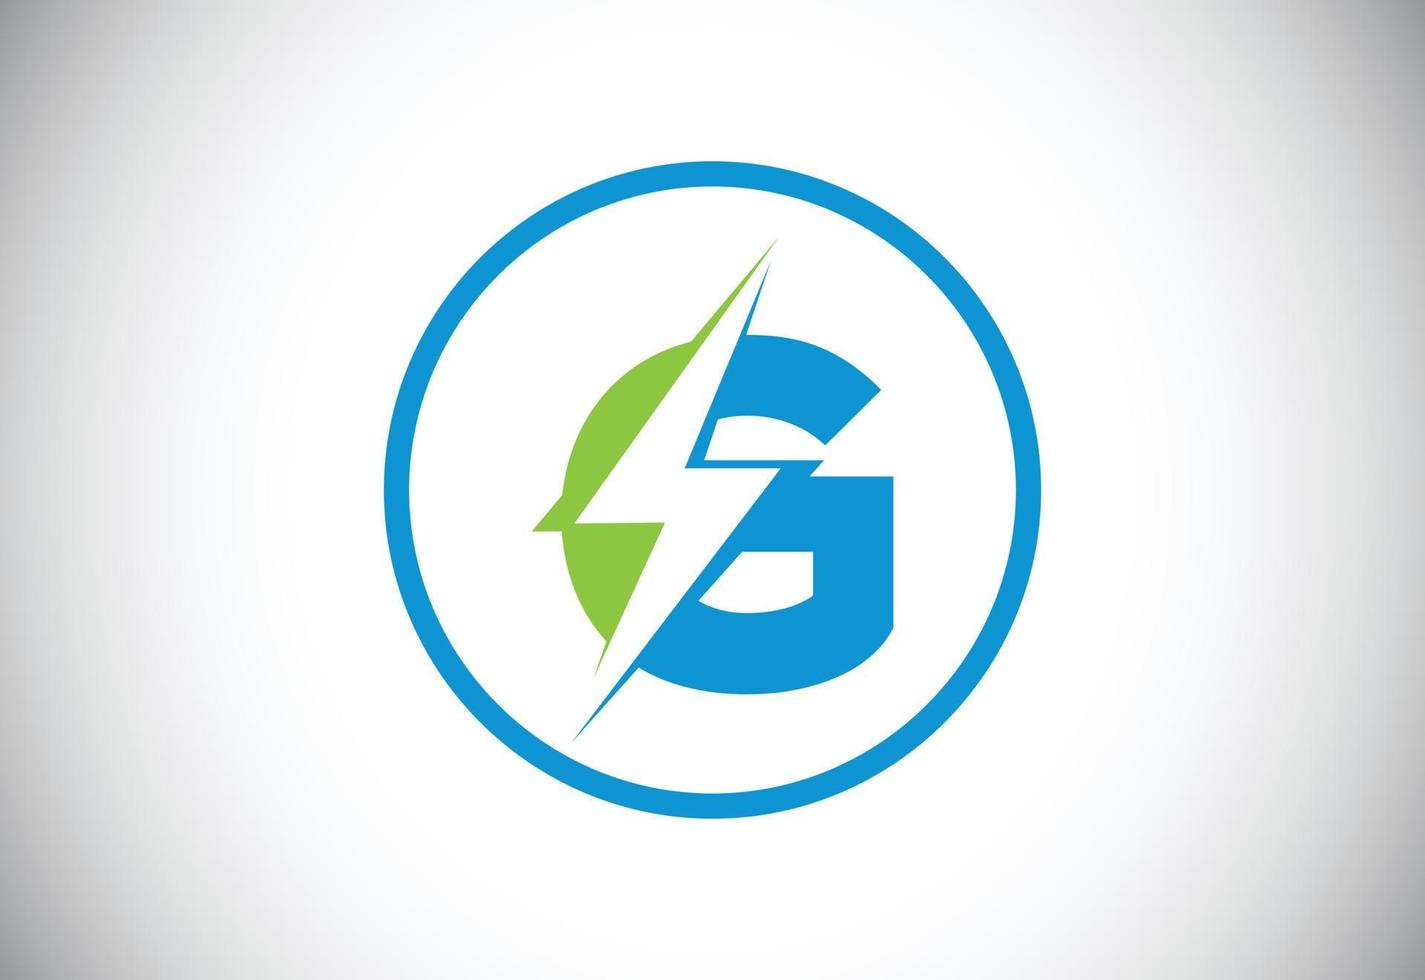 eerste g brief logo ontwerp met verlichting donder bout. elektrisch bout brief logo vector